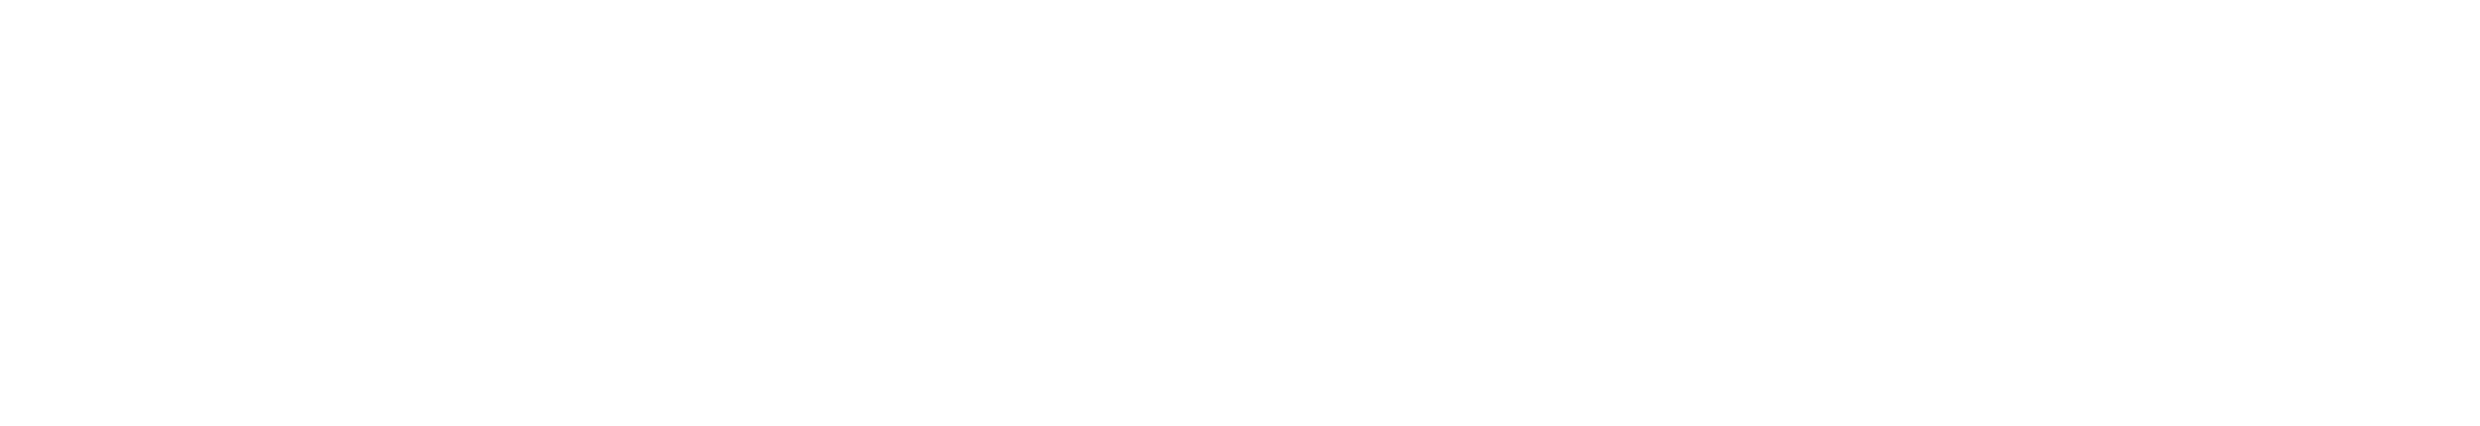 conSensuality essentials logo